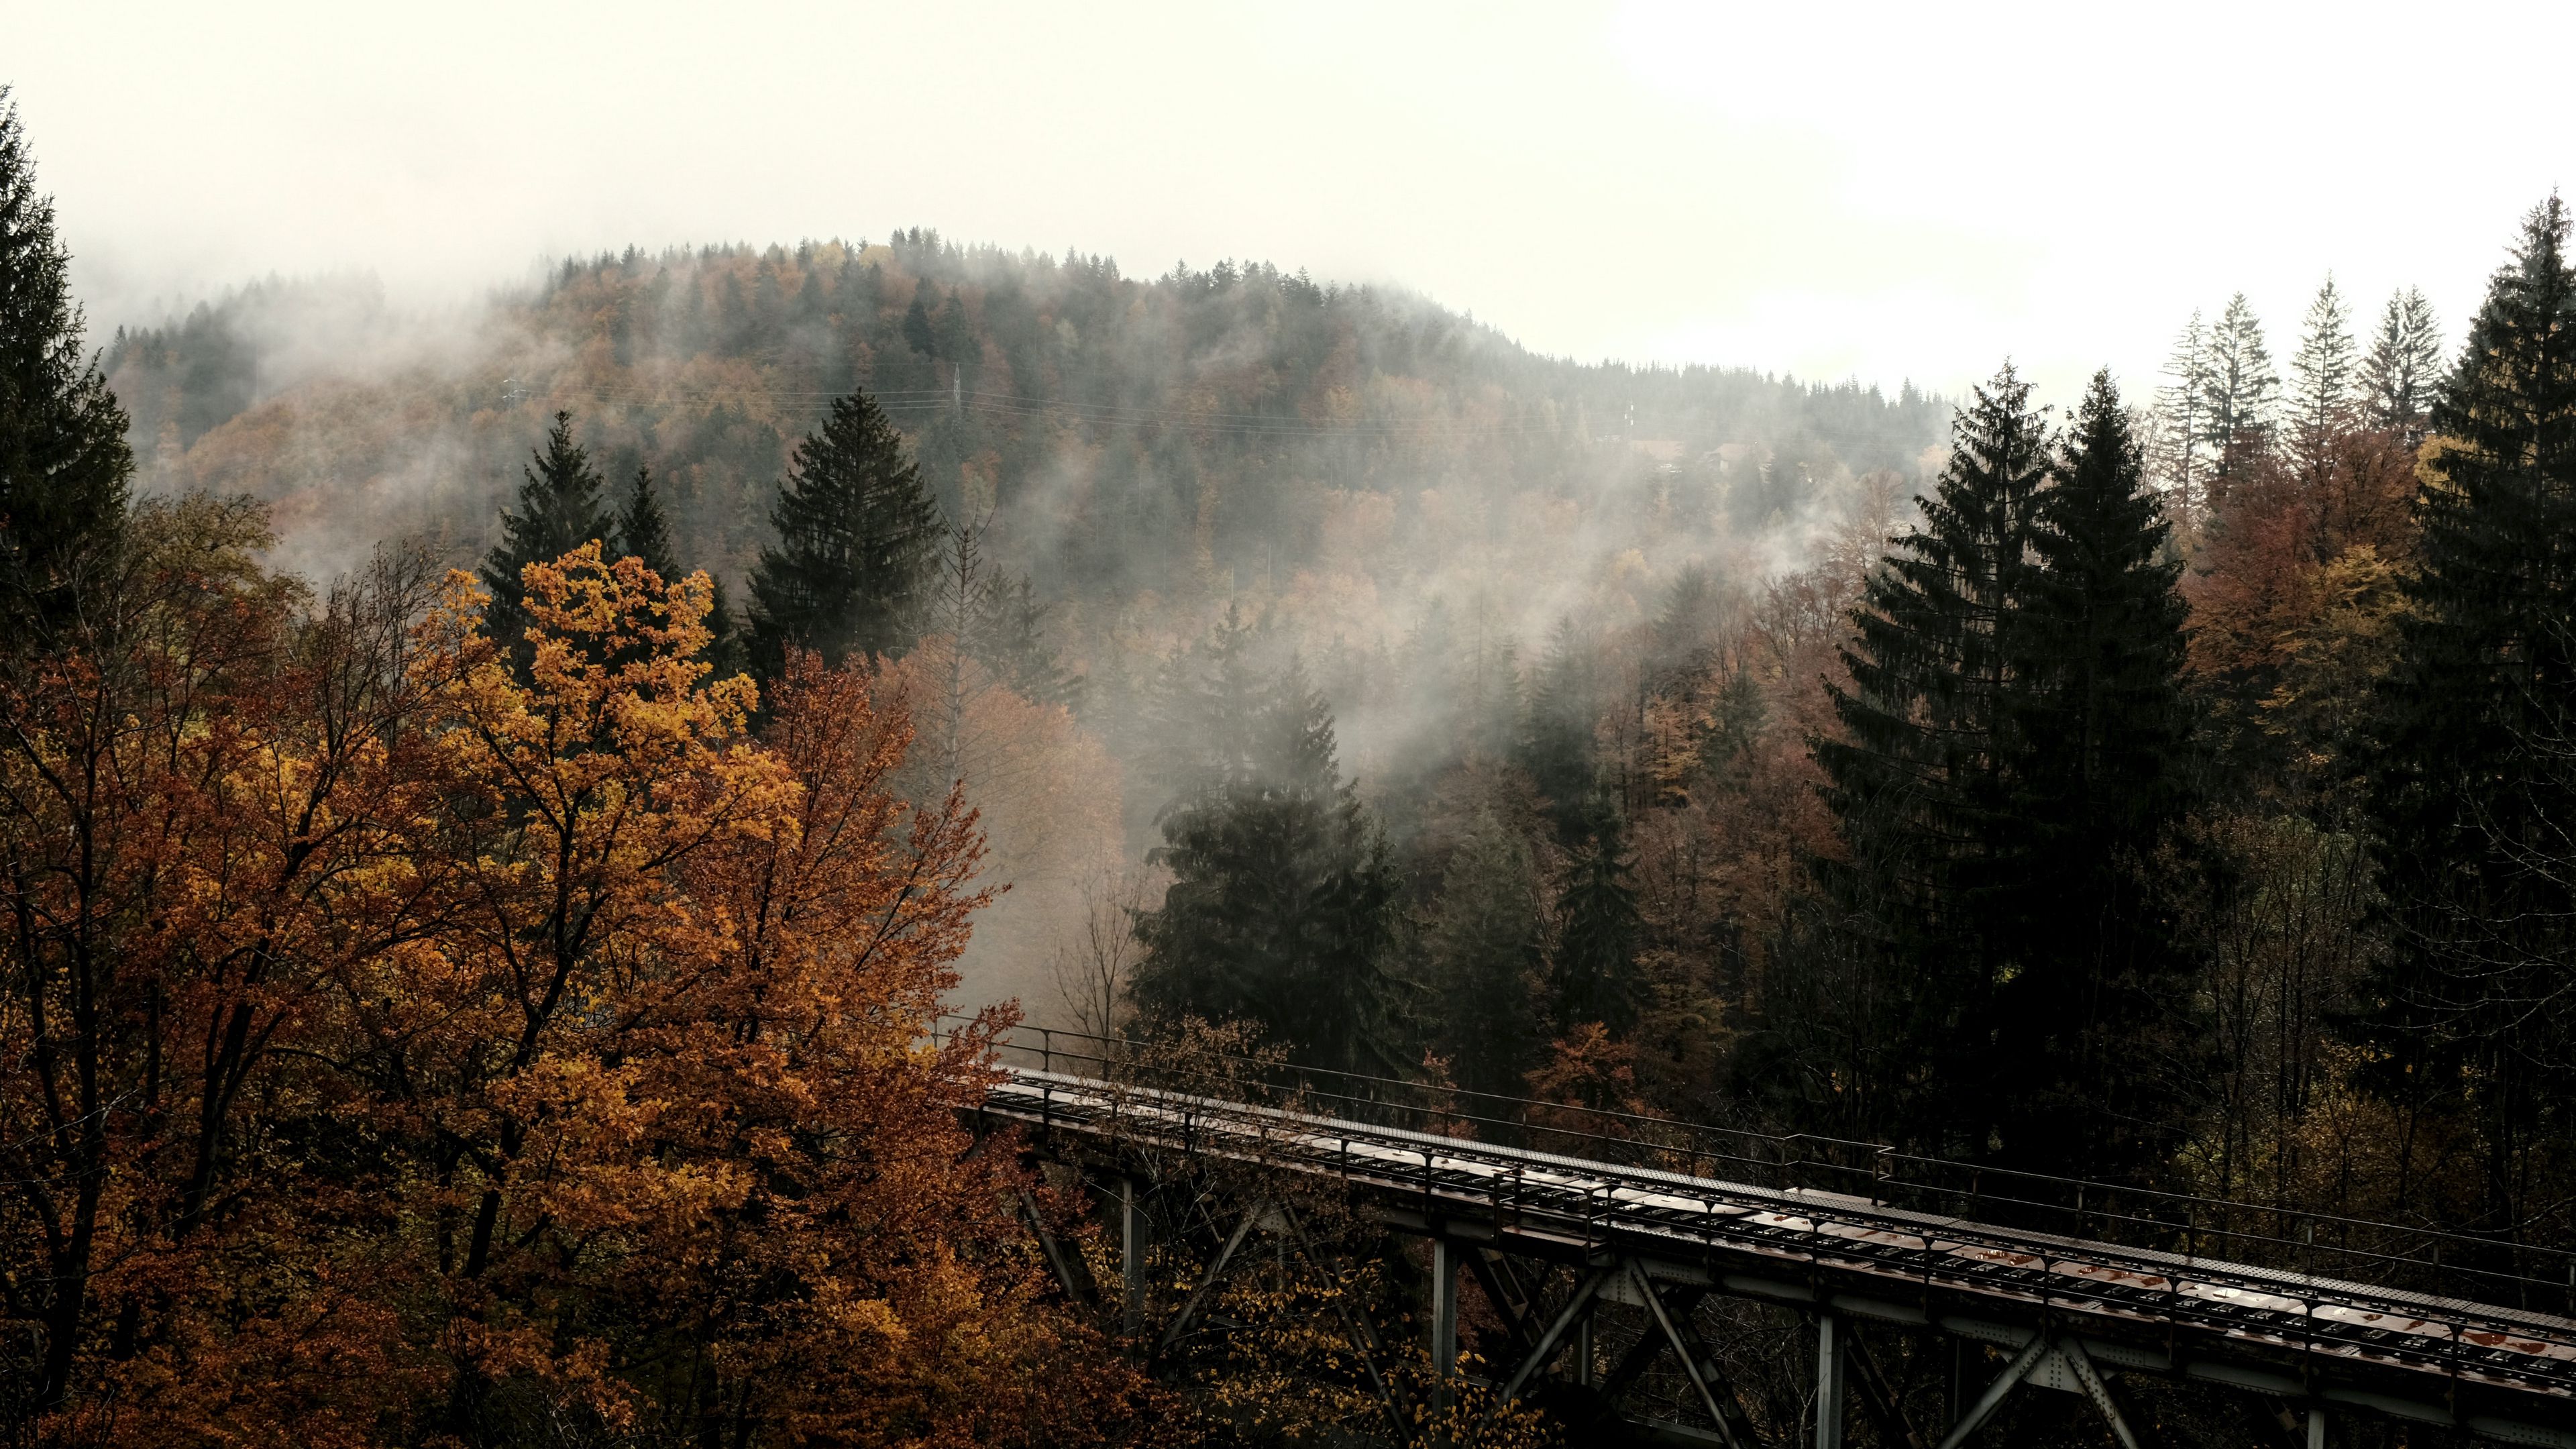 Download wallpaper 3840x2160 bridge, forest, trees, fog, autumn 4k uhd 16:9 HD background